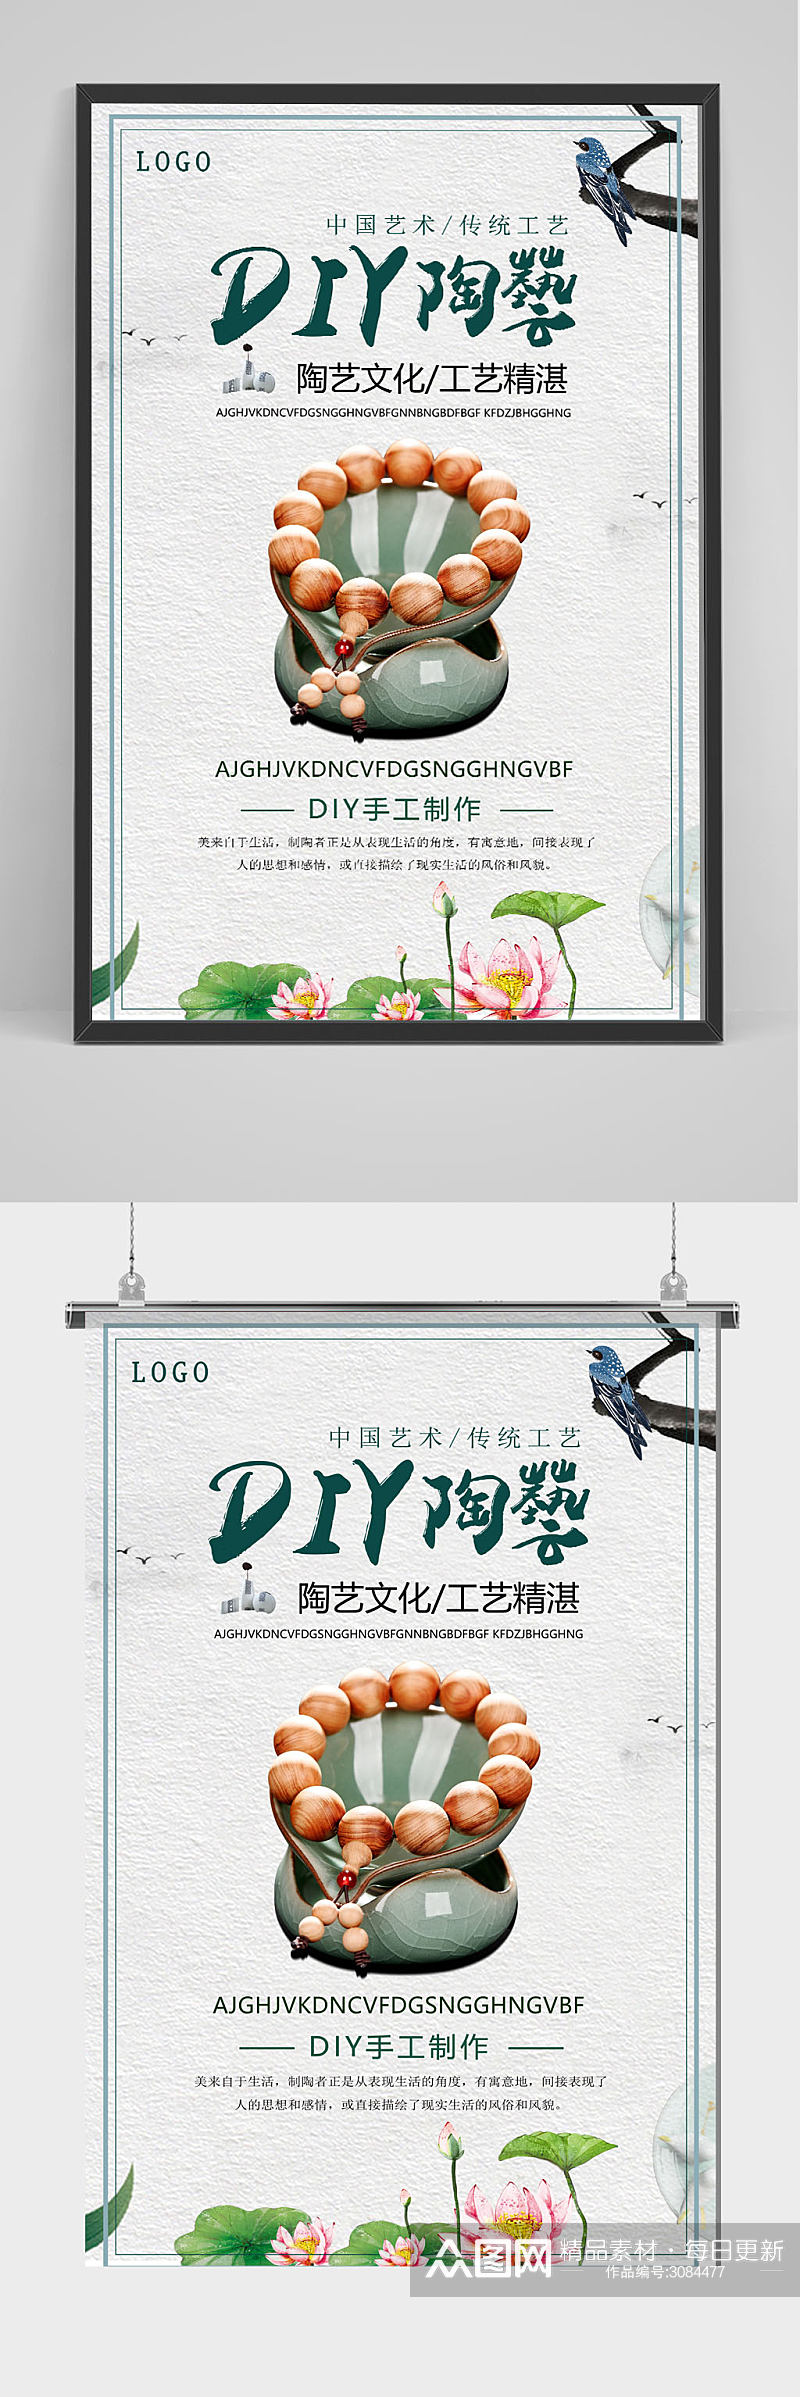 DIY手工陶艺广告设计海报素材